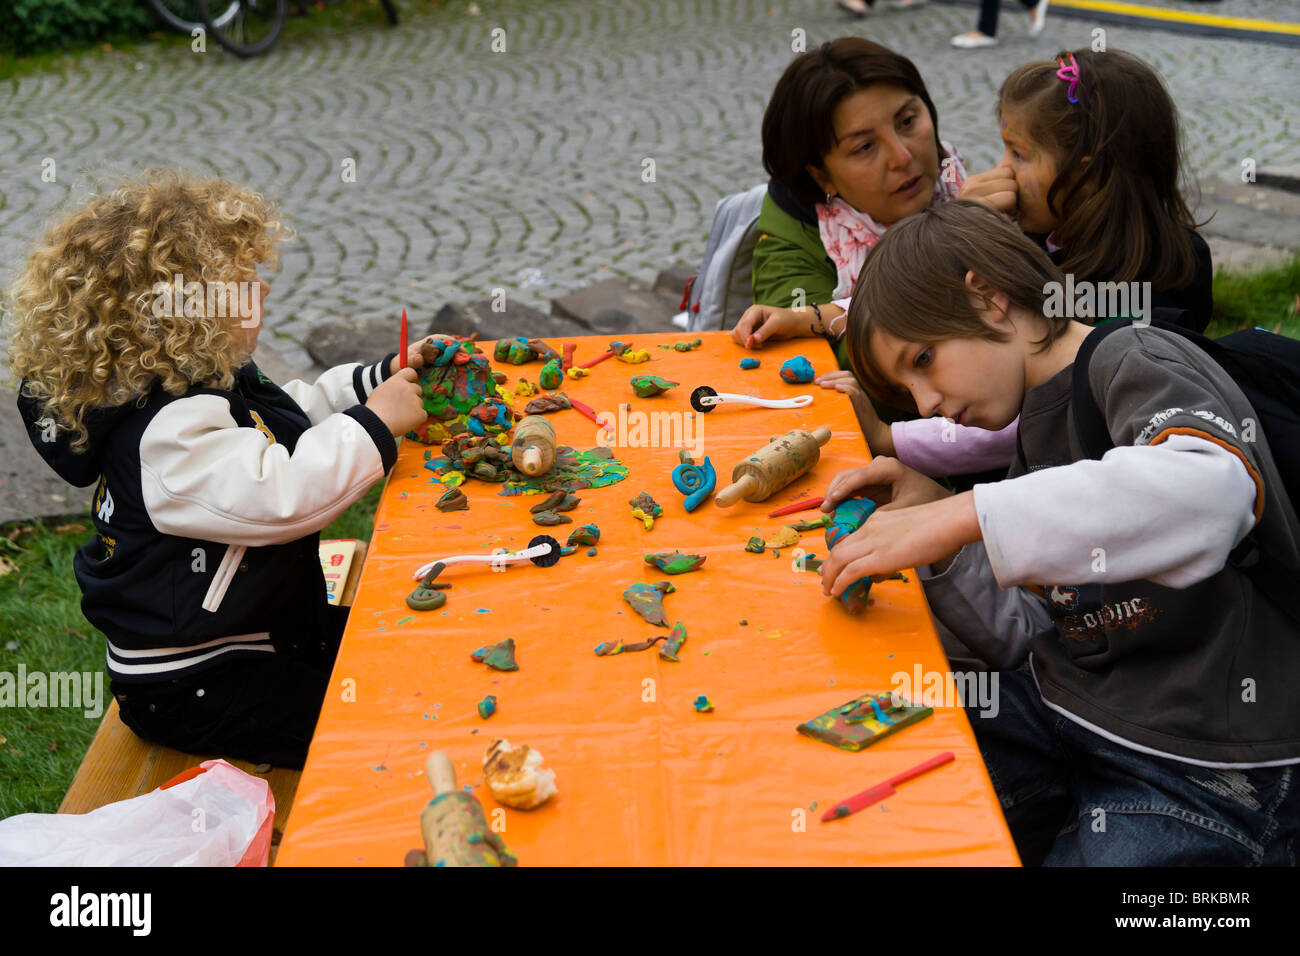 Cologne - world Children's Day kids' weekend festival held in the city September 18-19 2010 - plasticina modelling Stock Photo